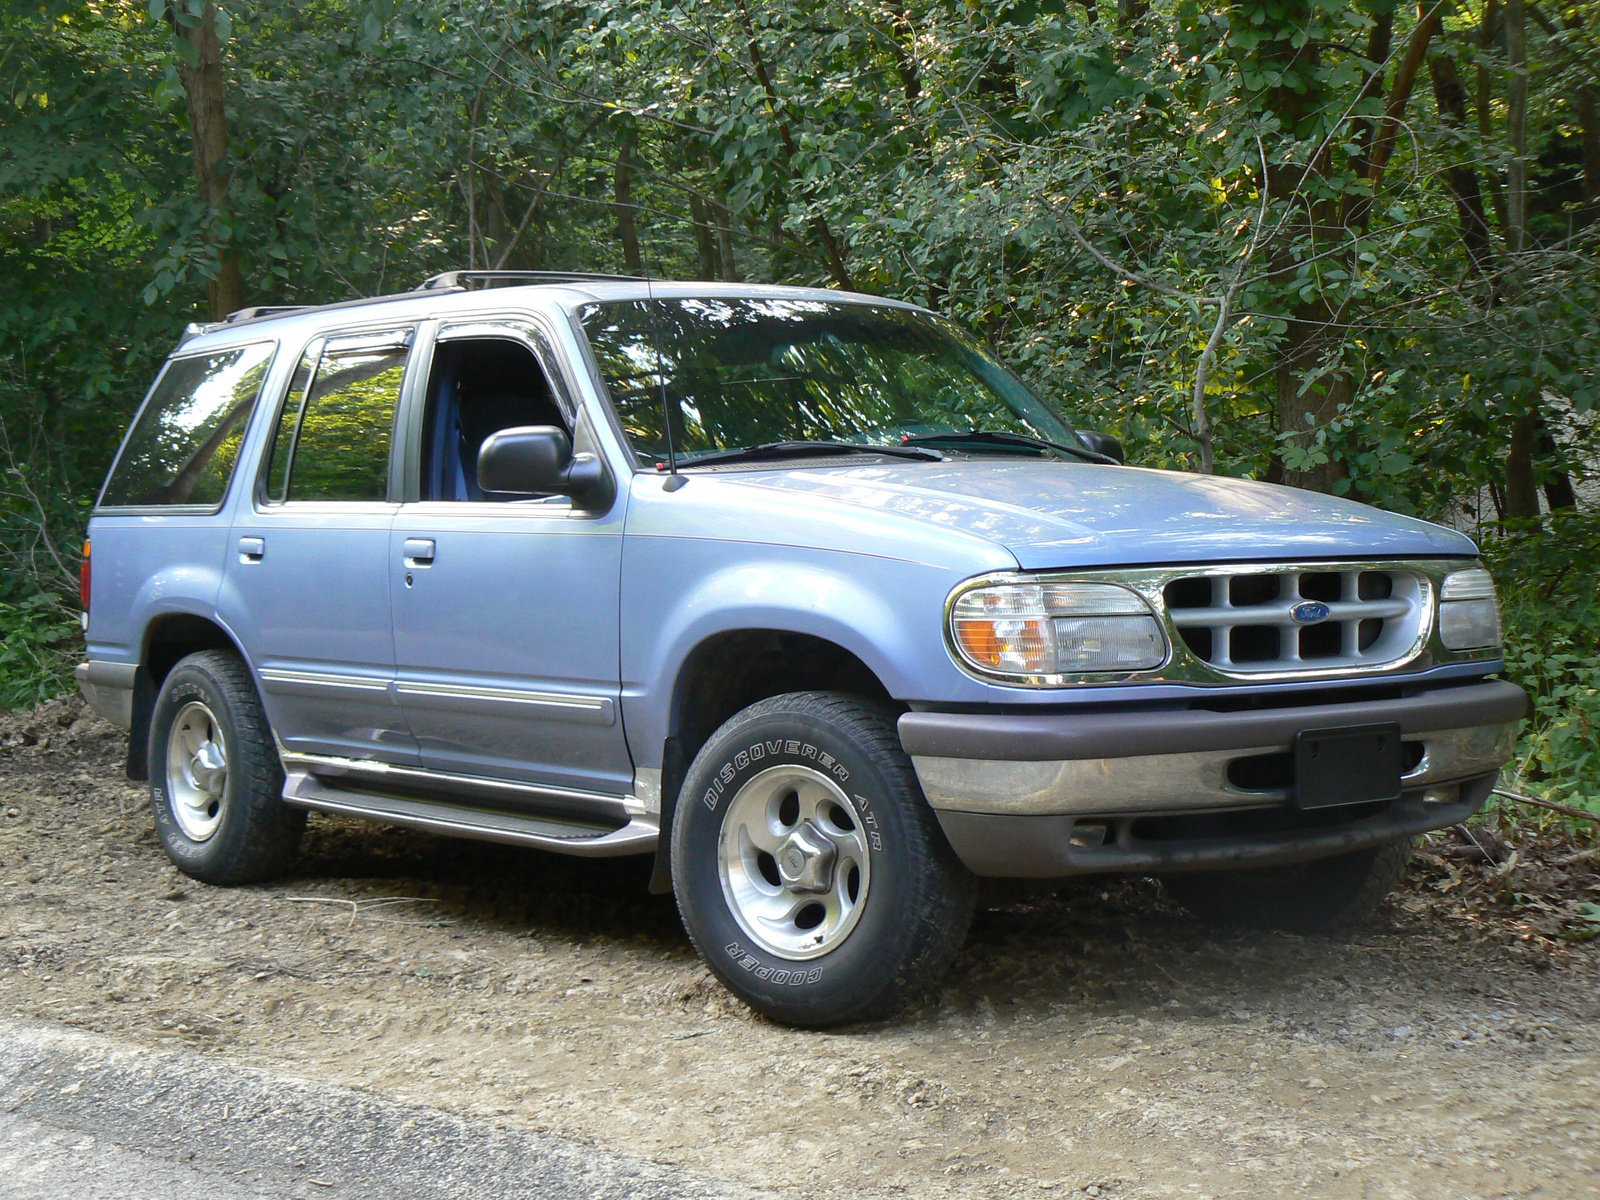 1997 Ford explorer xlt tire size